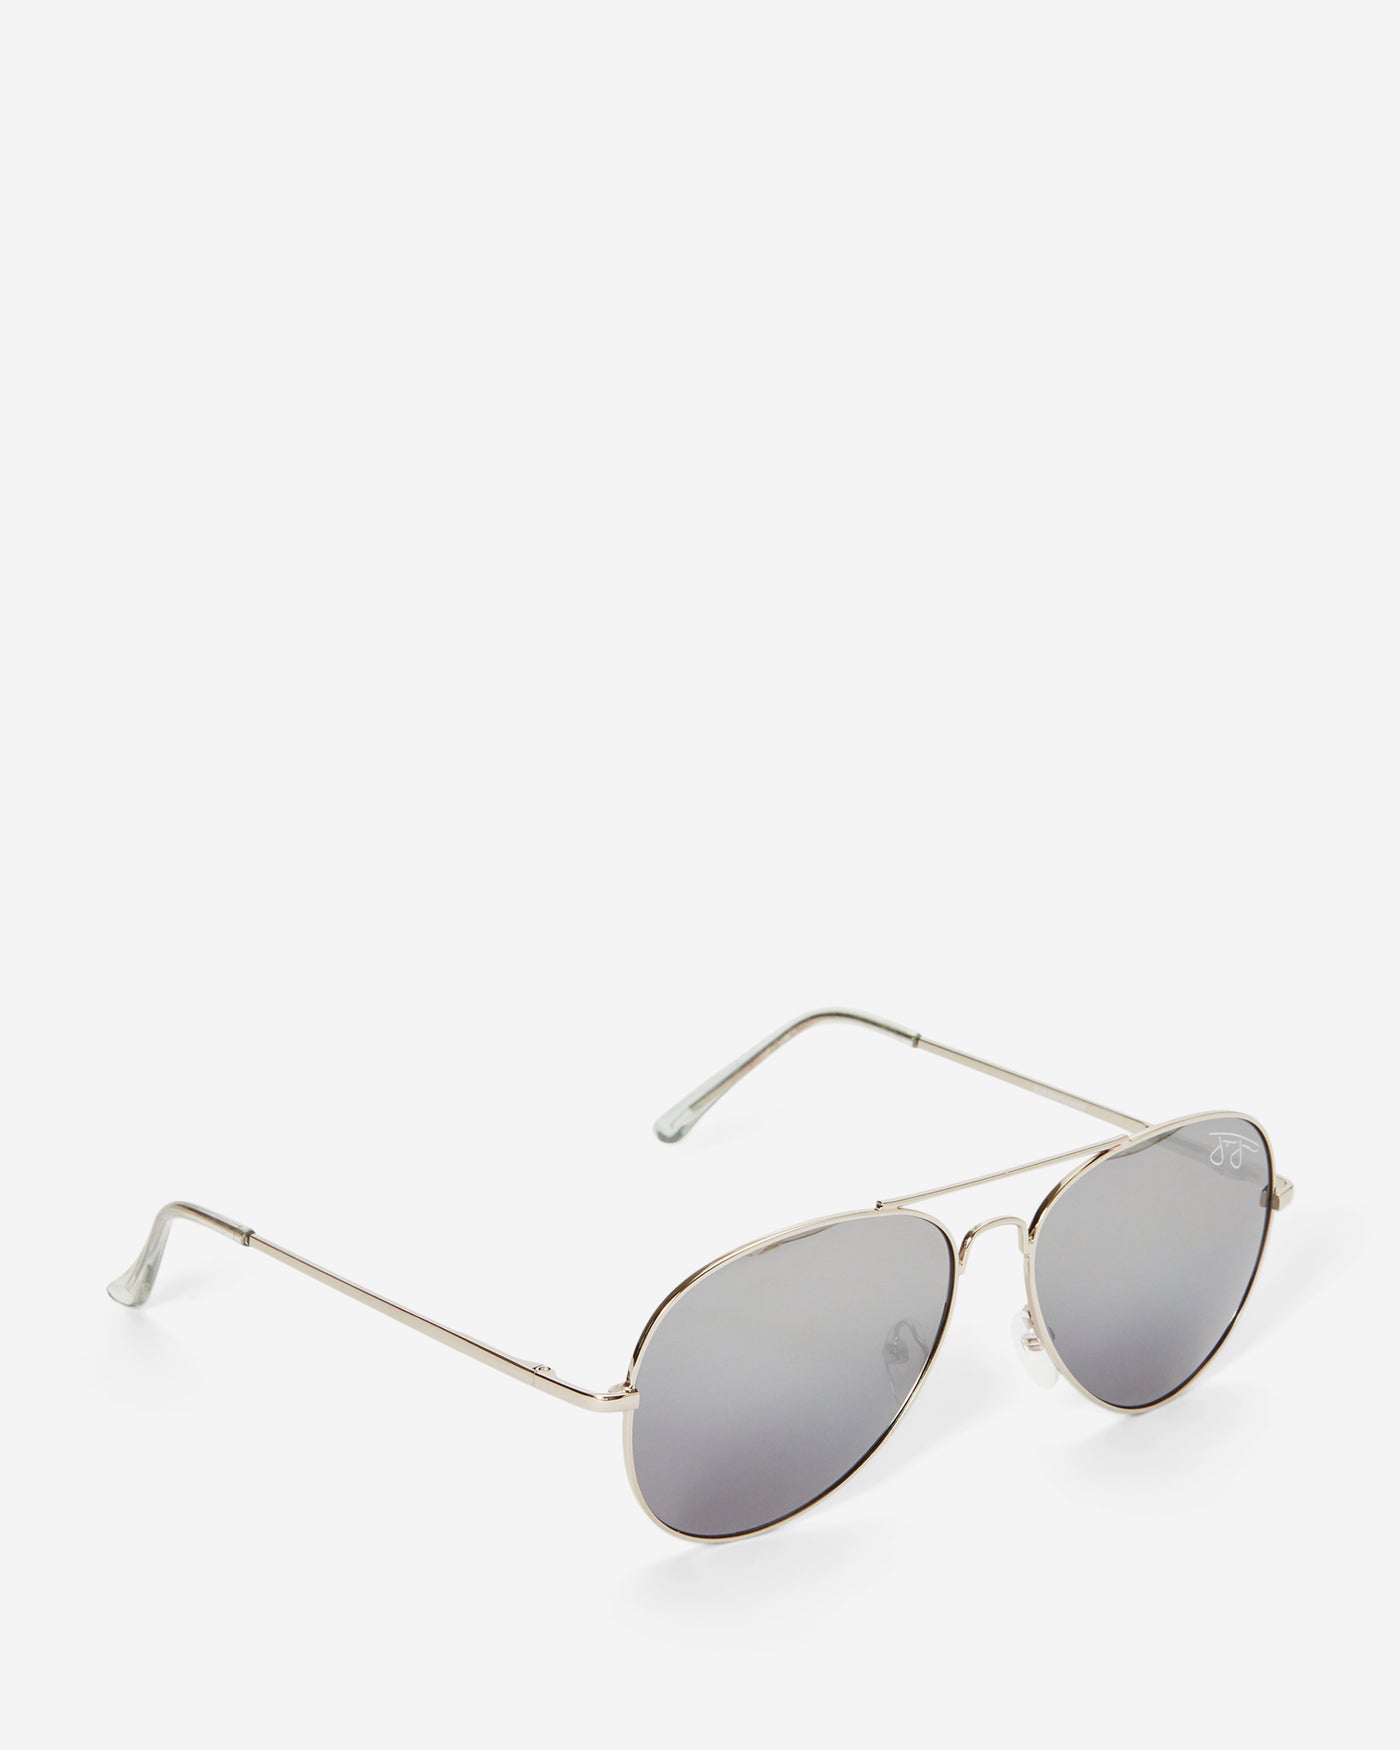 Classic Aviator Sunglasses - Gold Metal Frame with Smoke Lens Sunglasses Joey James, The Label   